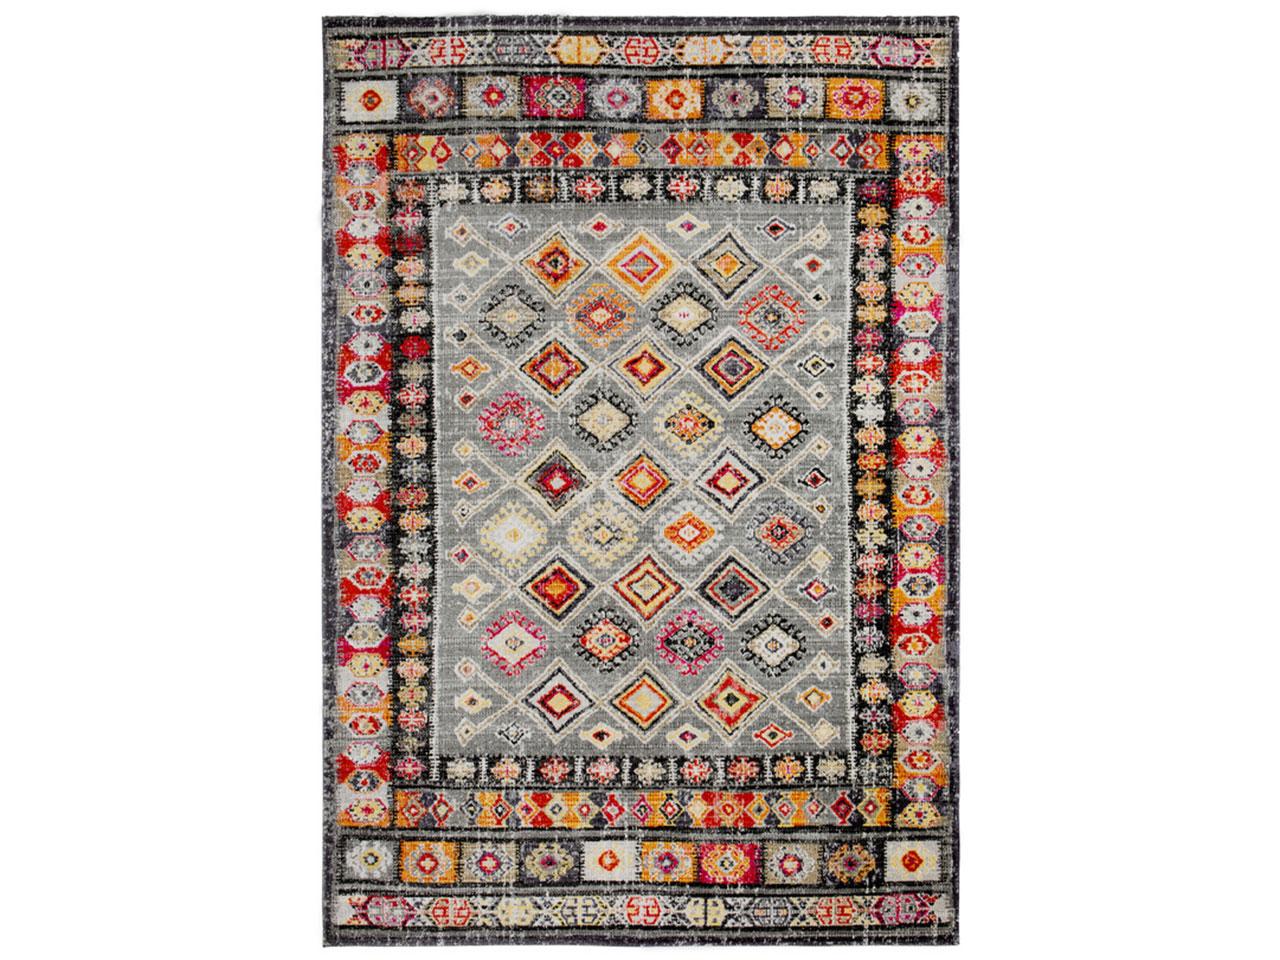 Dětský koberec ANDIAMO Bonnie Colore multi light pattern, 170 x 120 cm